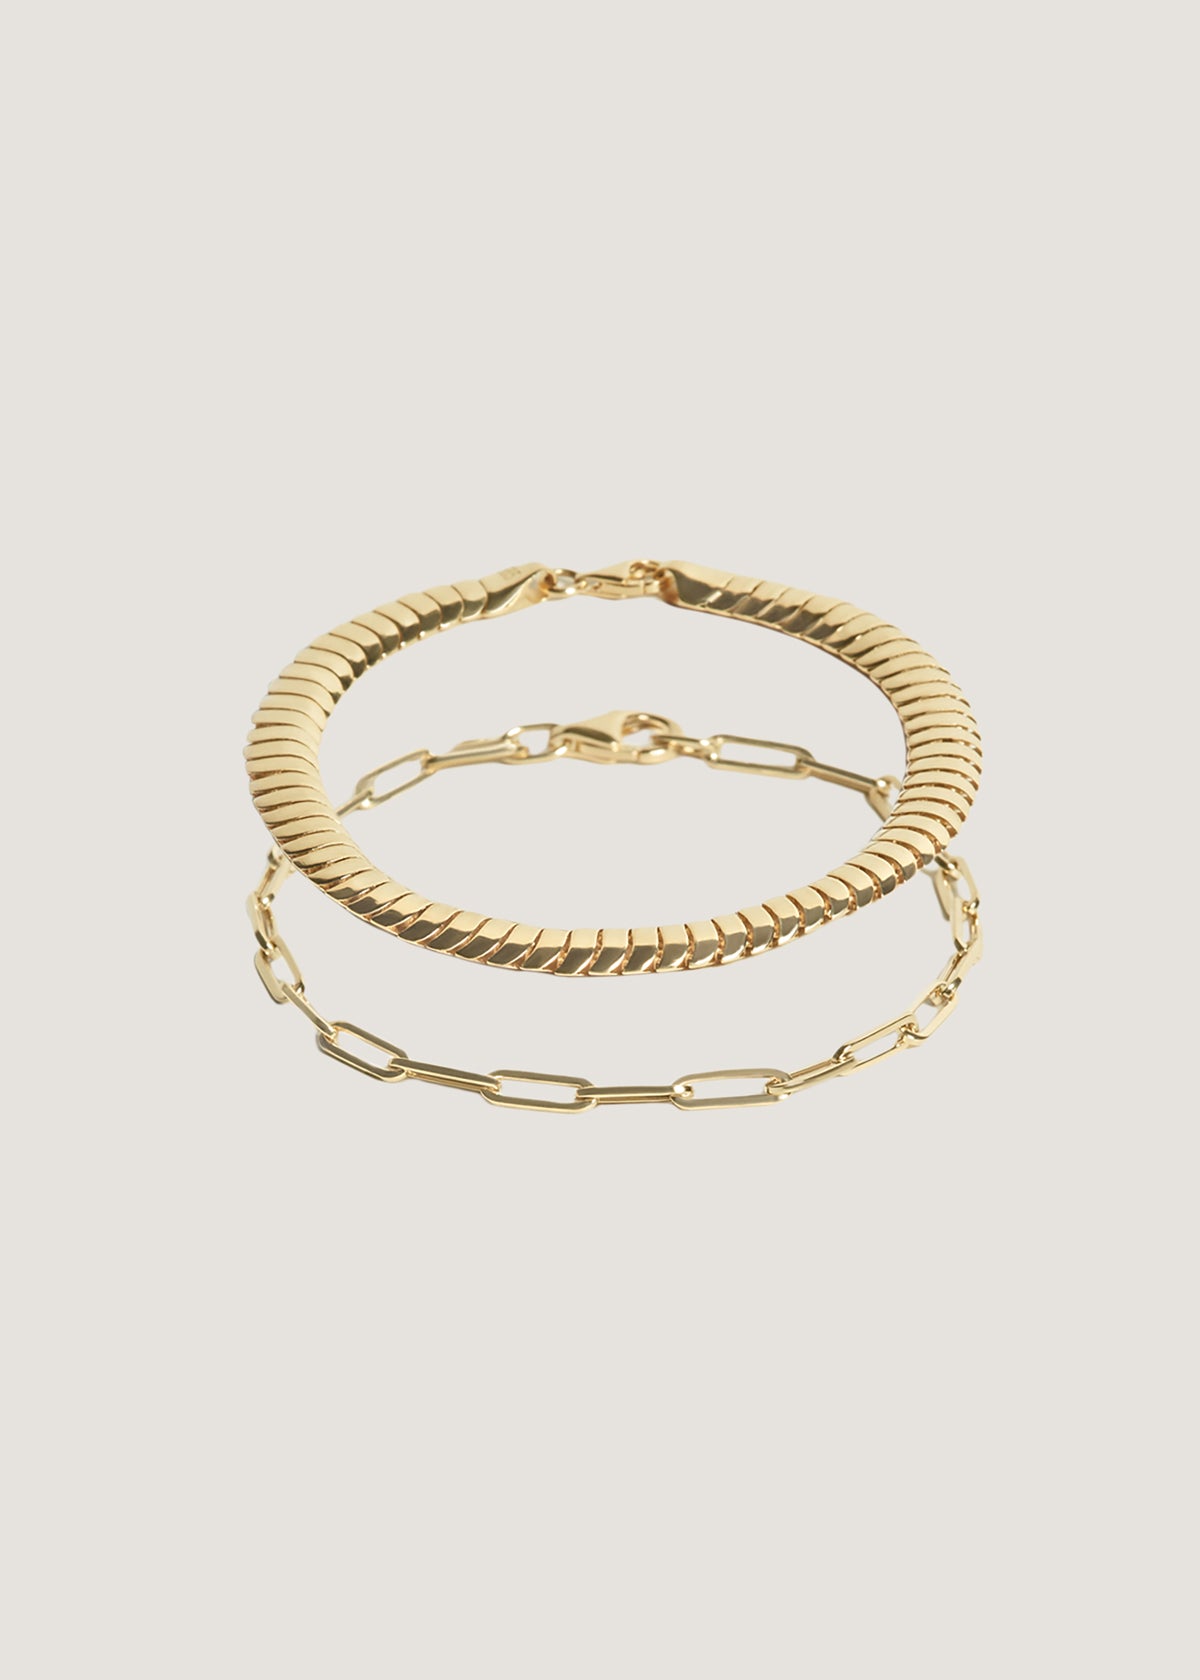 alt="Cobra I & Petite Link Chain Bracelet Stack"